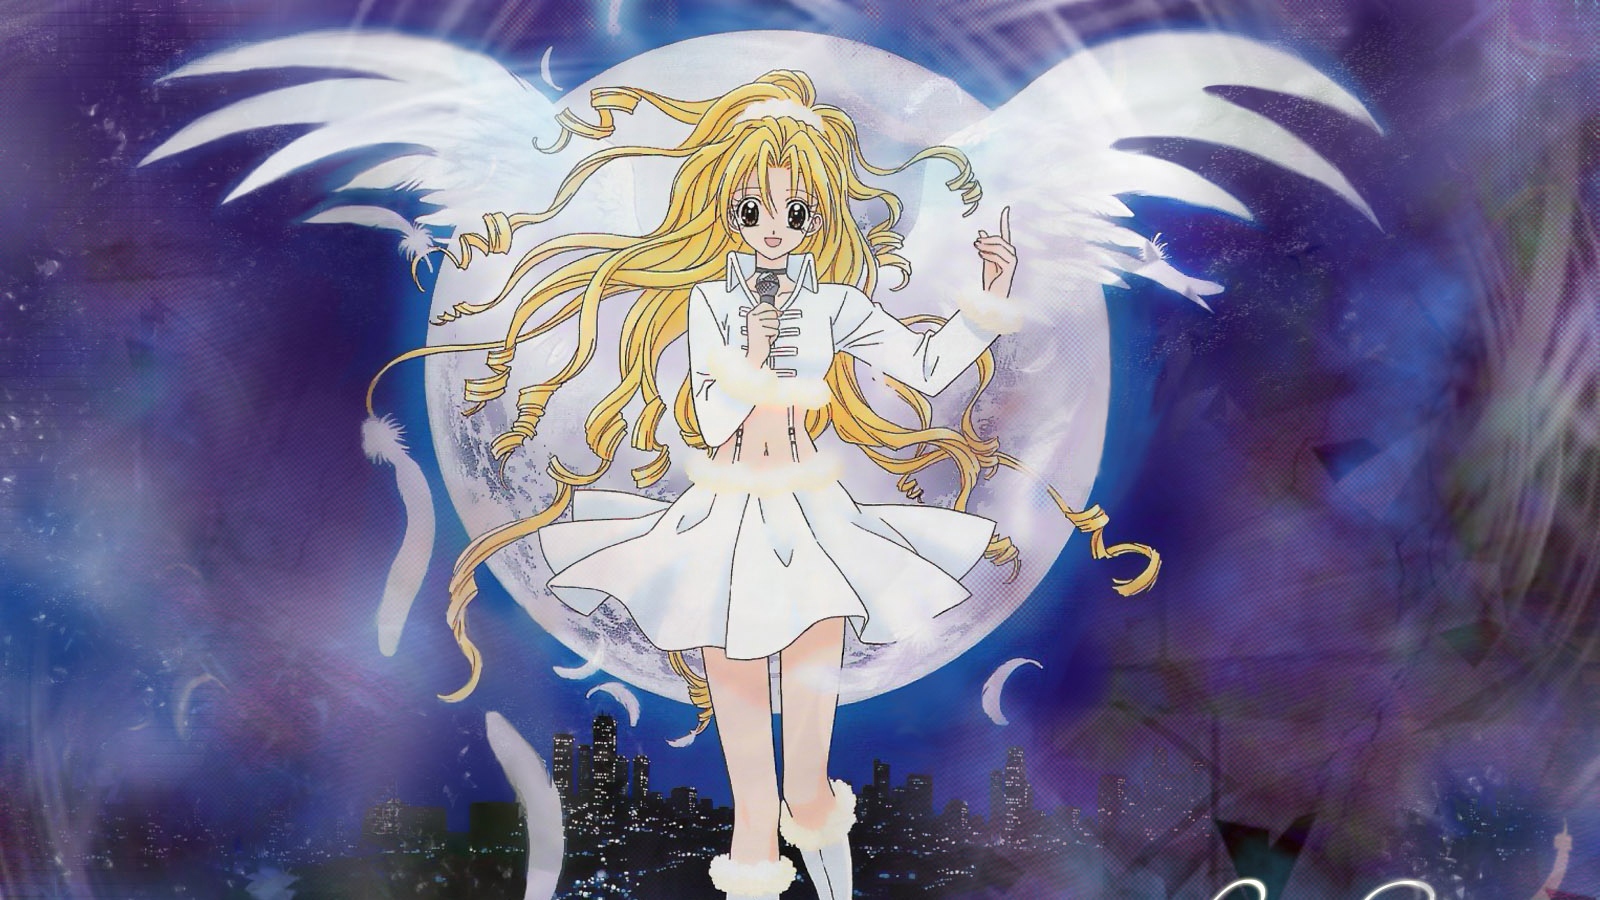 DECEMBER 2002 ANIMERICA anime/manga magazine - SPIRITED AWAY - MIYAZAKI |  eBay